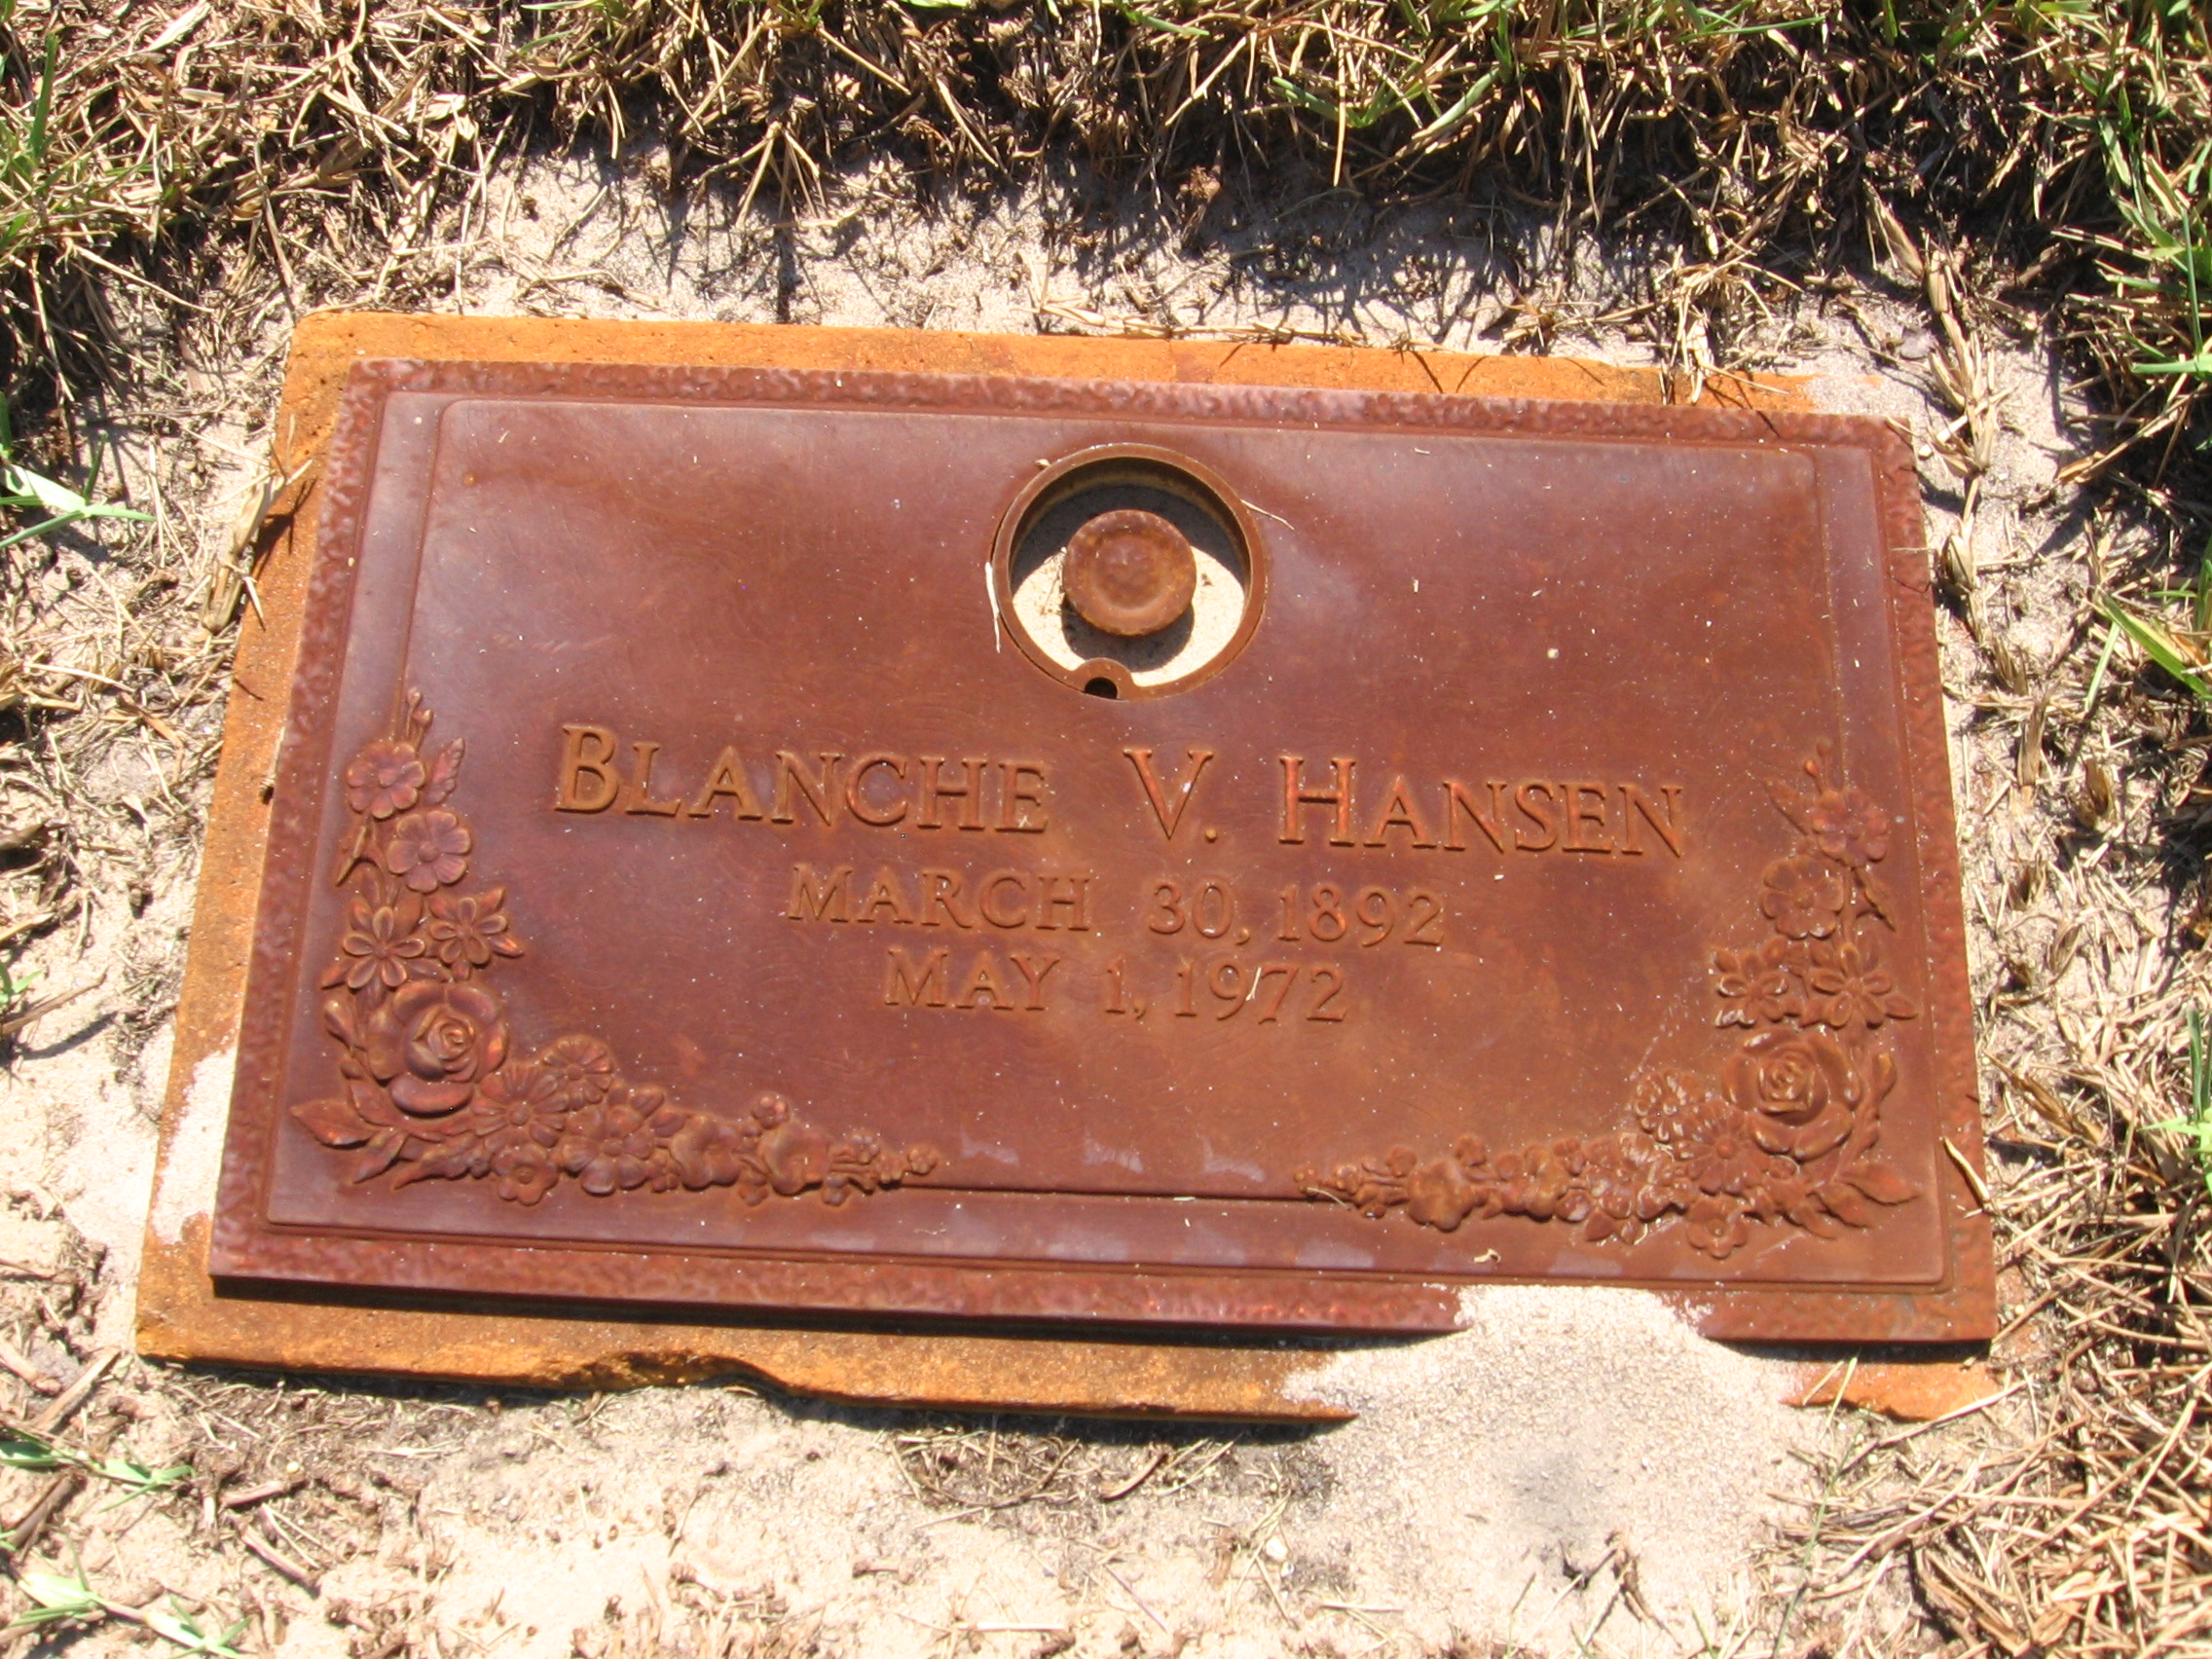 Blanche V Hansen